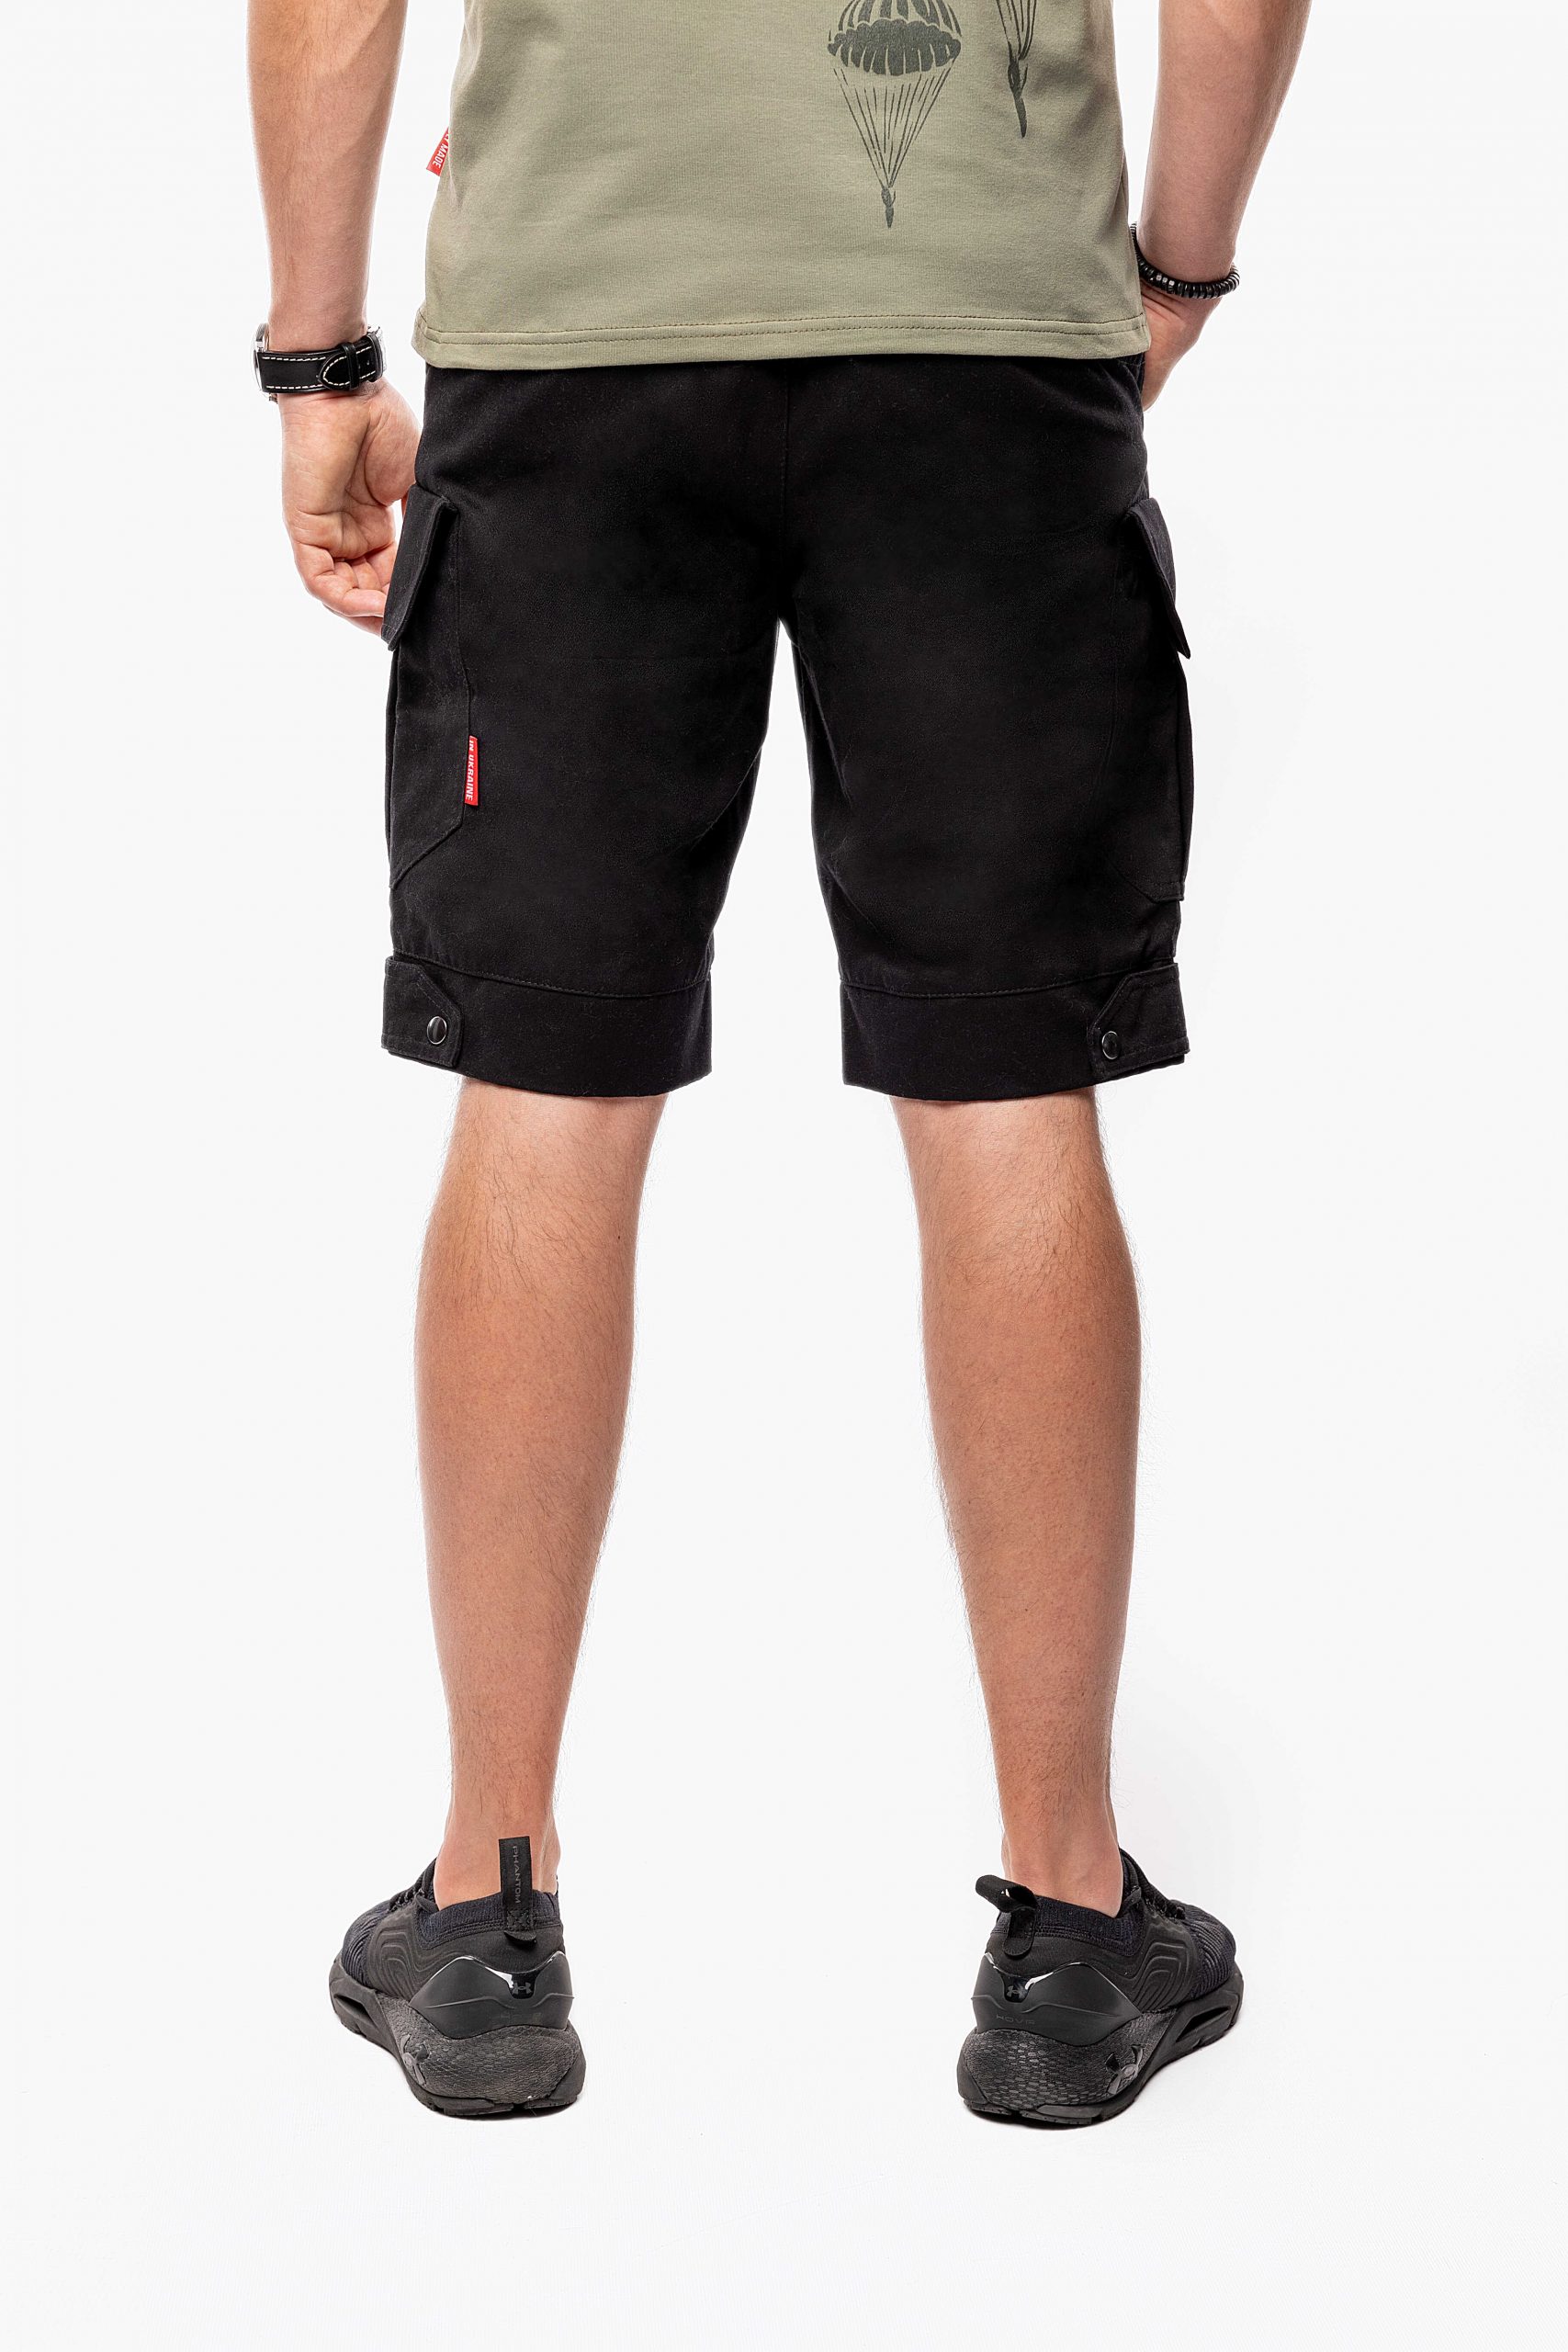 Men's Shorts Flyer. Color black.  .